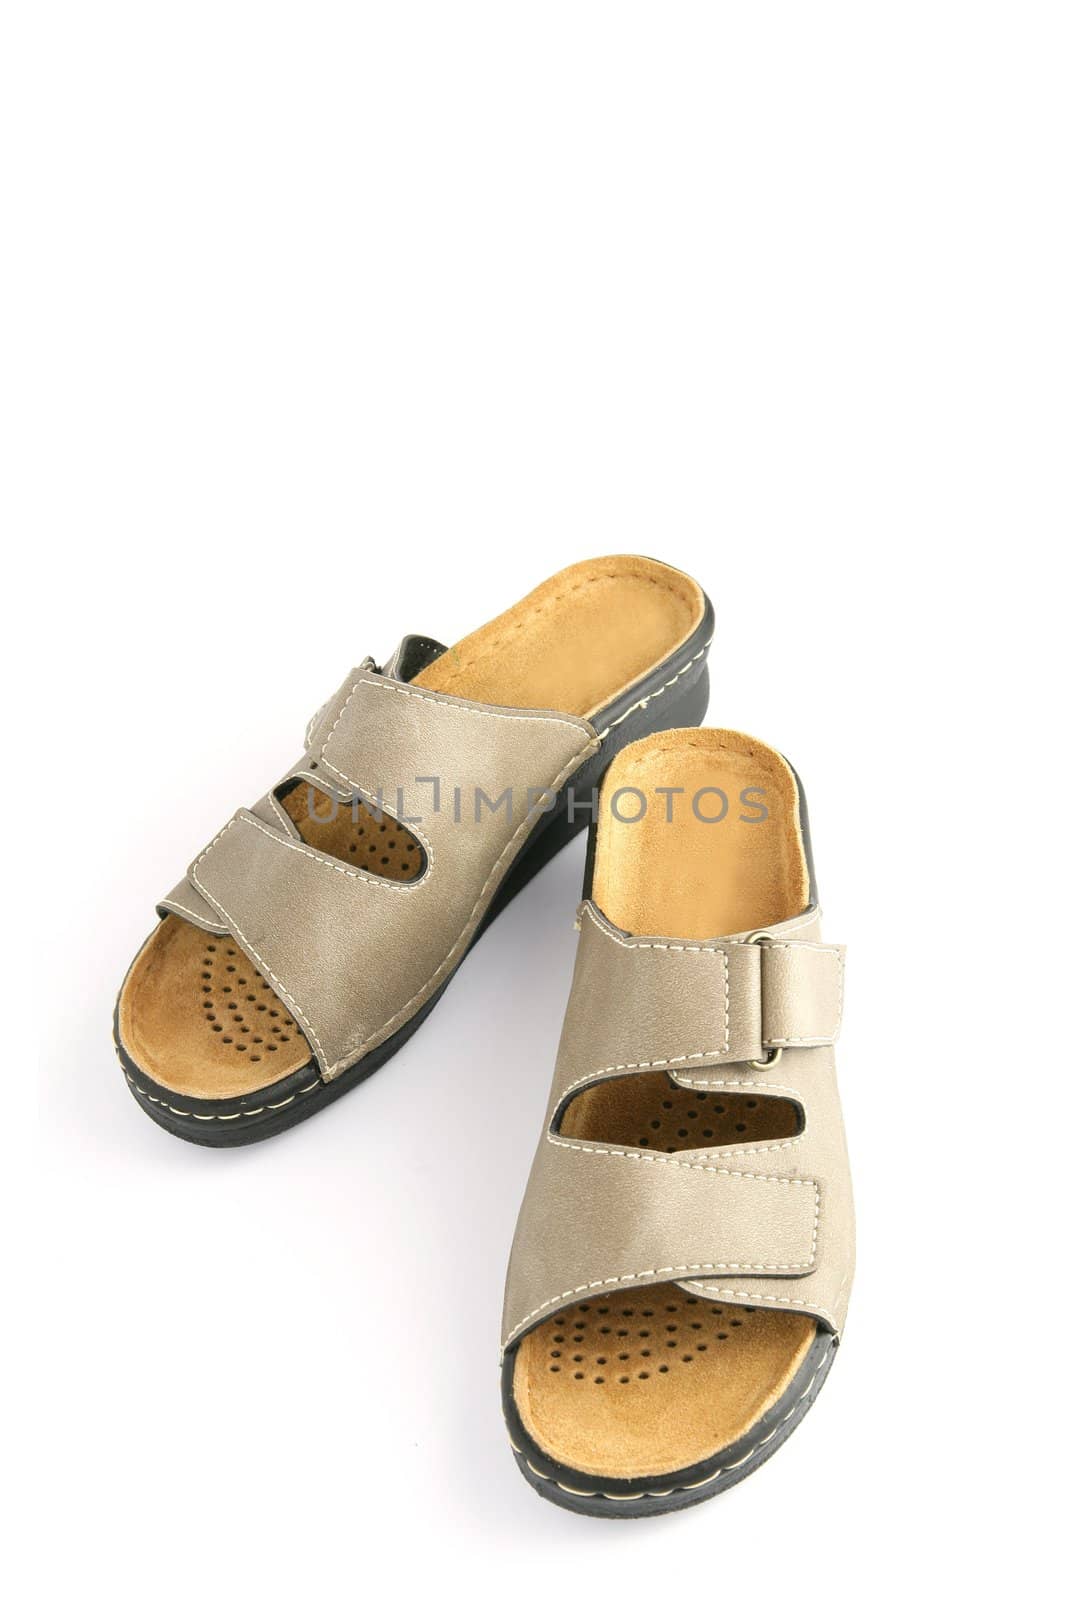 Beige sandals by phovoir